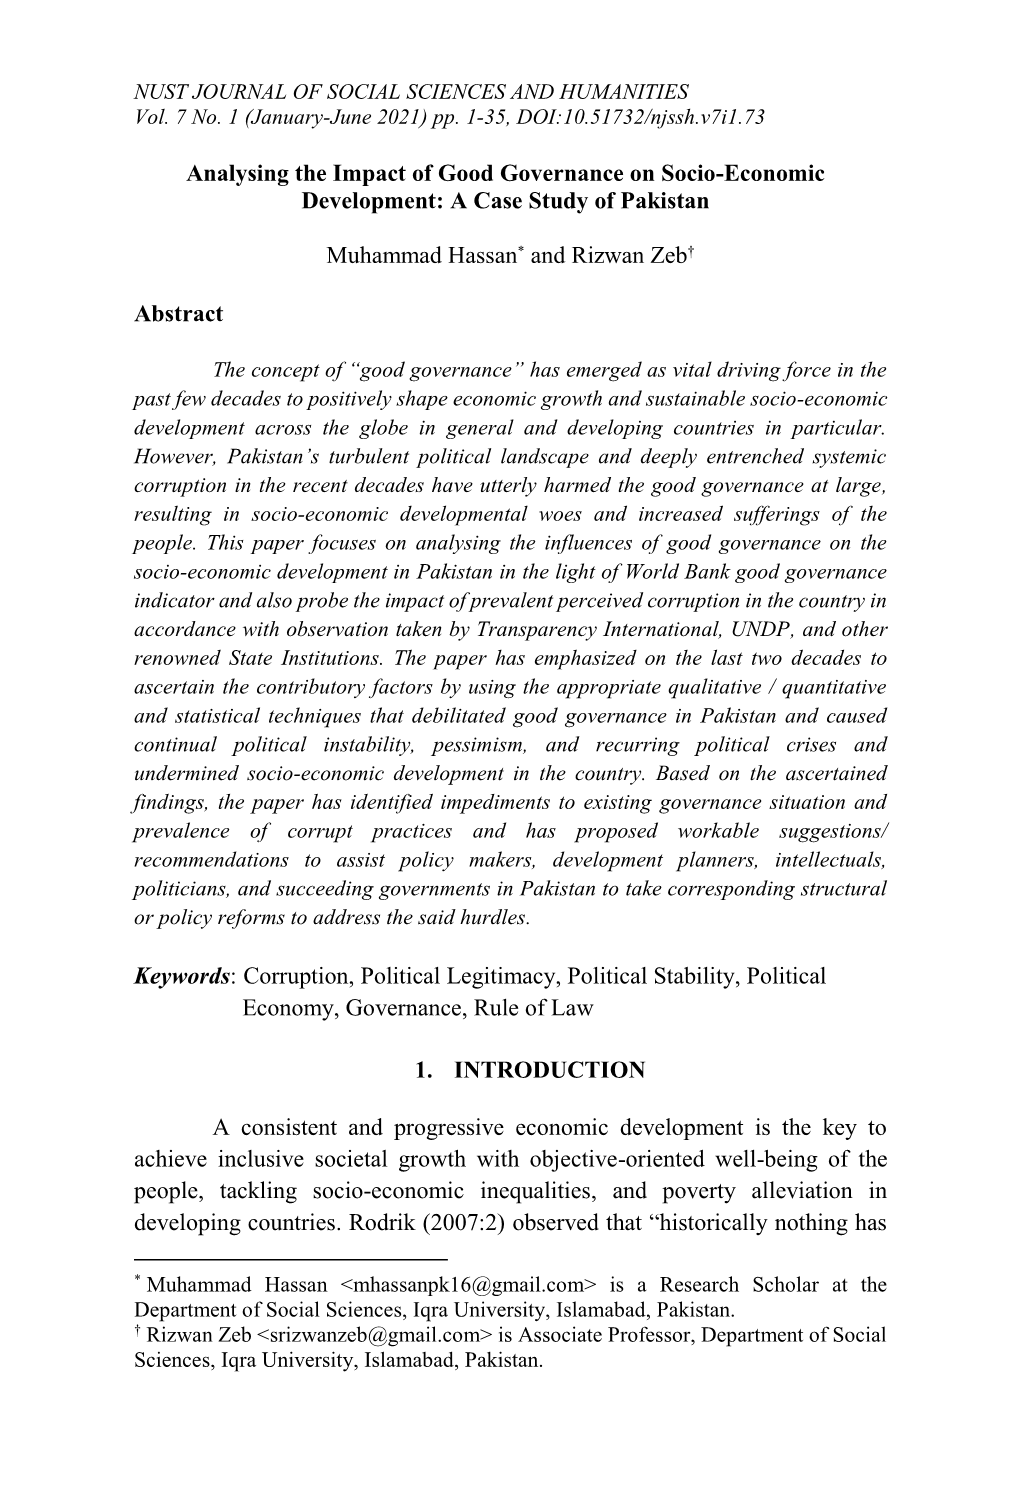 Analysing the Impact of Good Governance on Socio-Economic Development: a Case Study of Pakistan